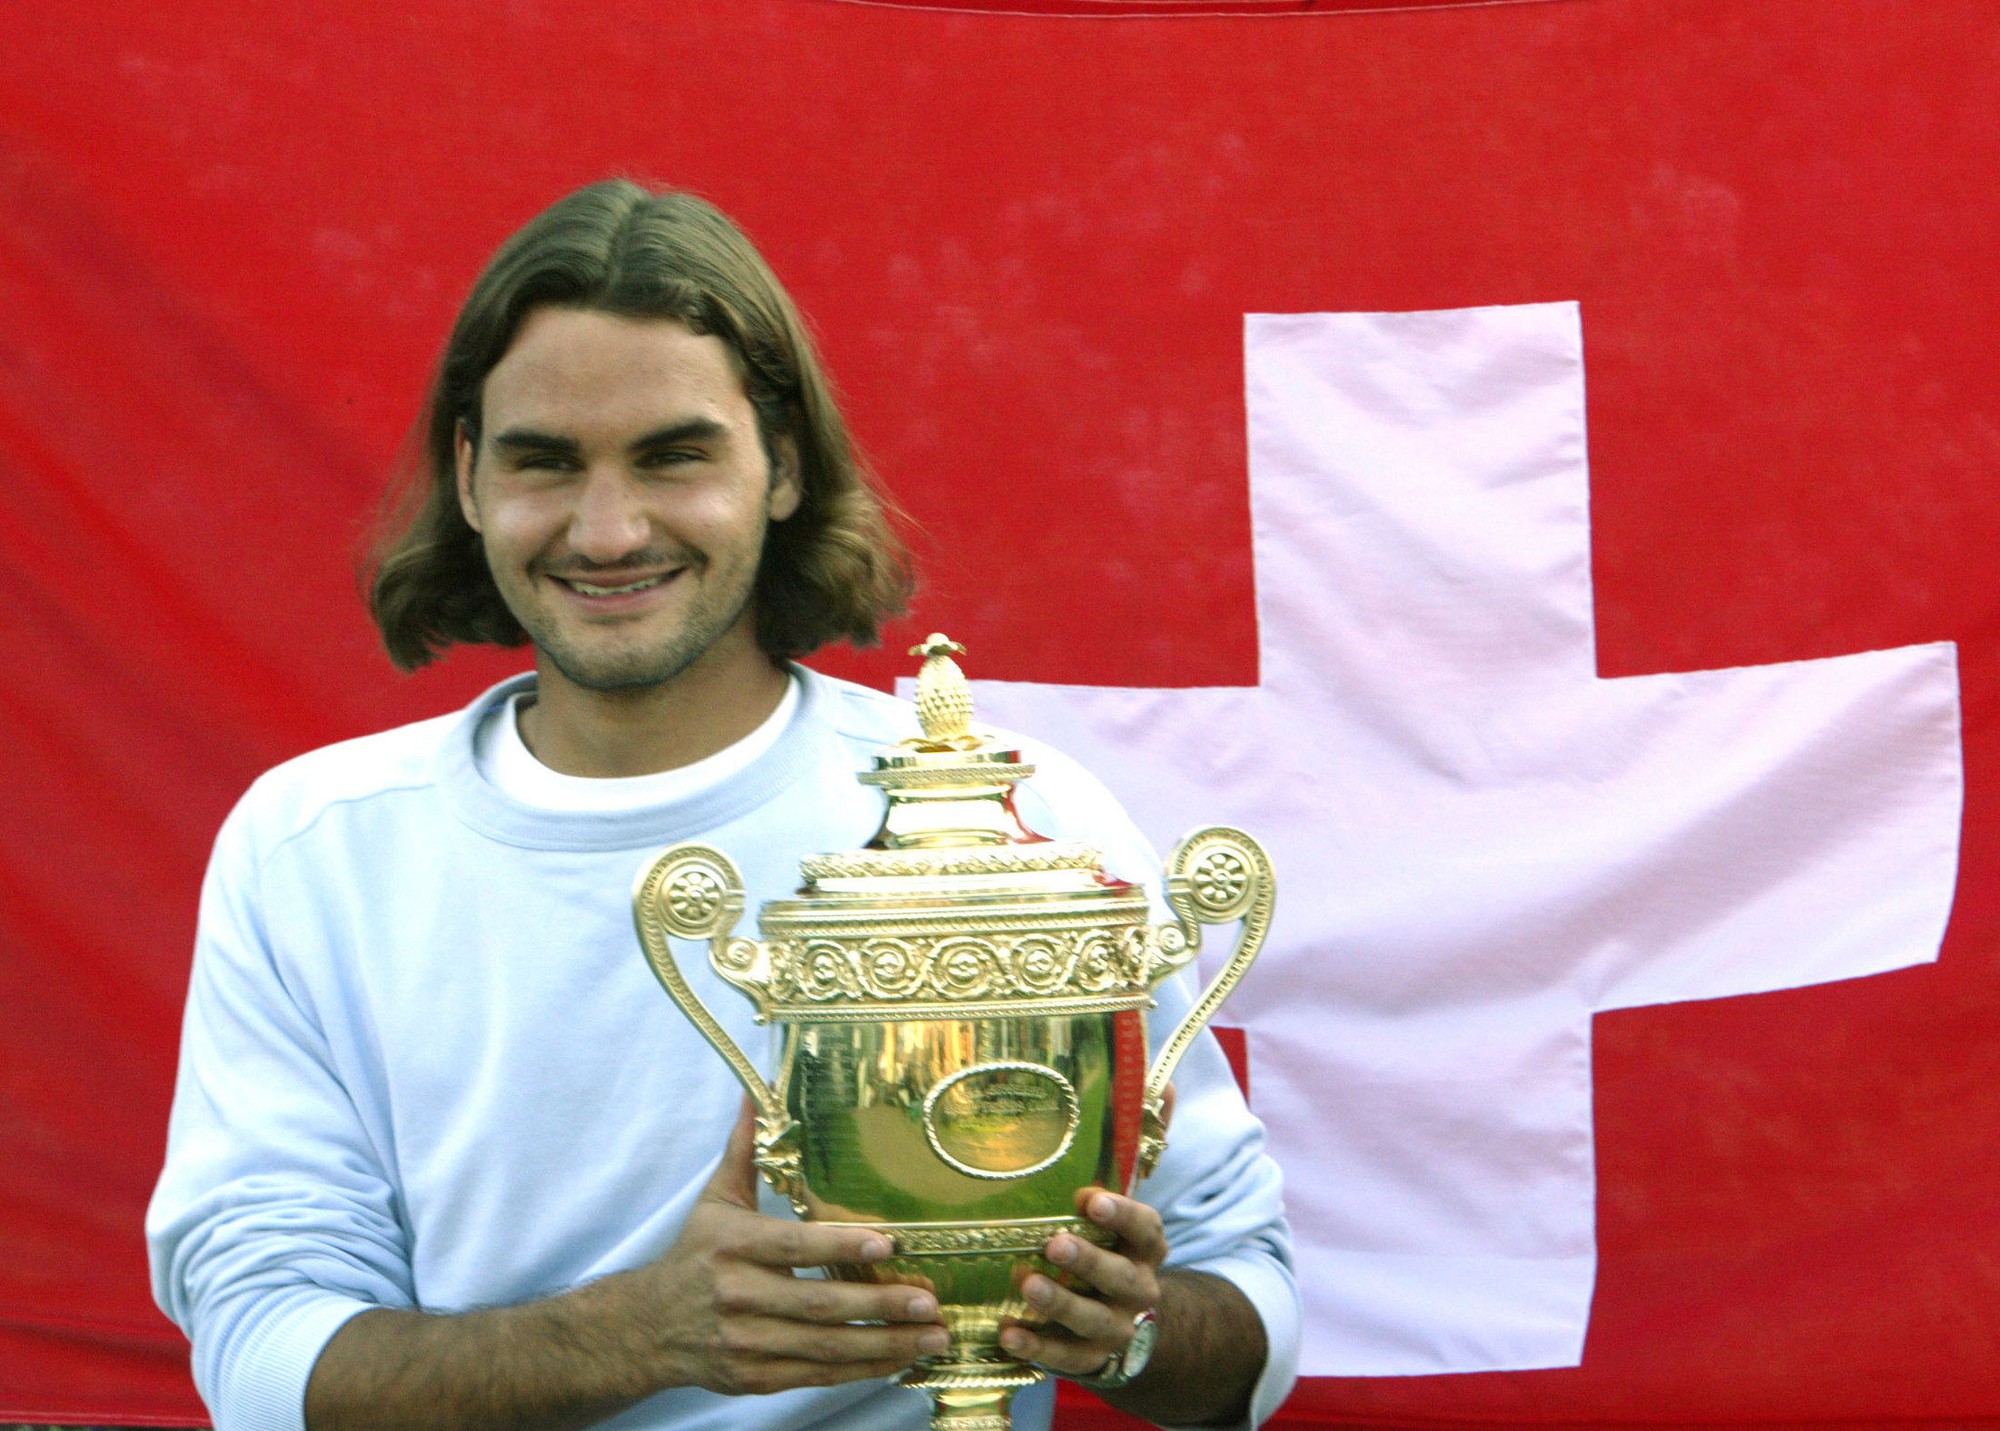 Wimbledon 2003 là danh hiệu Grand Slam đầu tiên của Federer